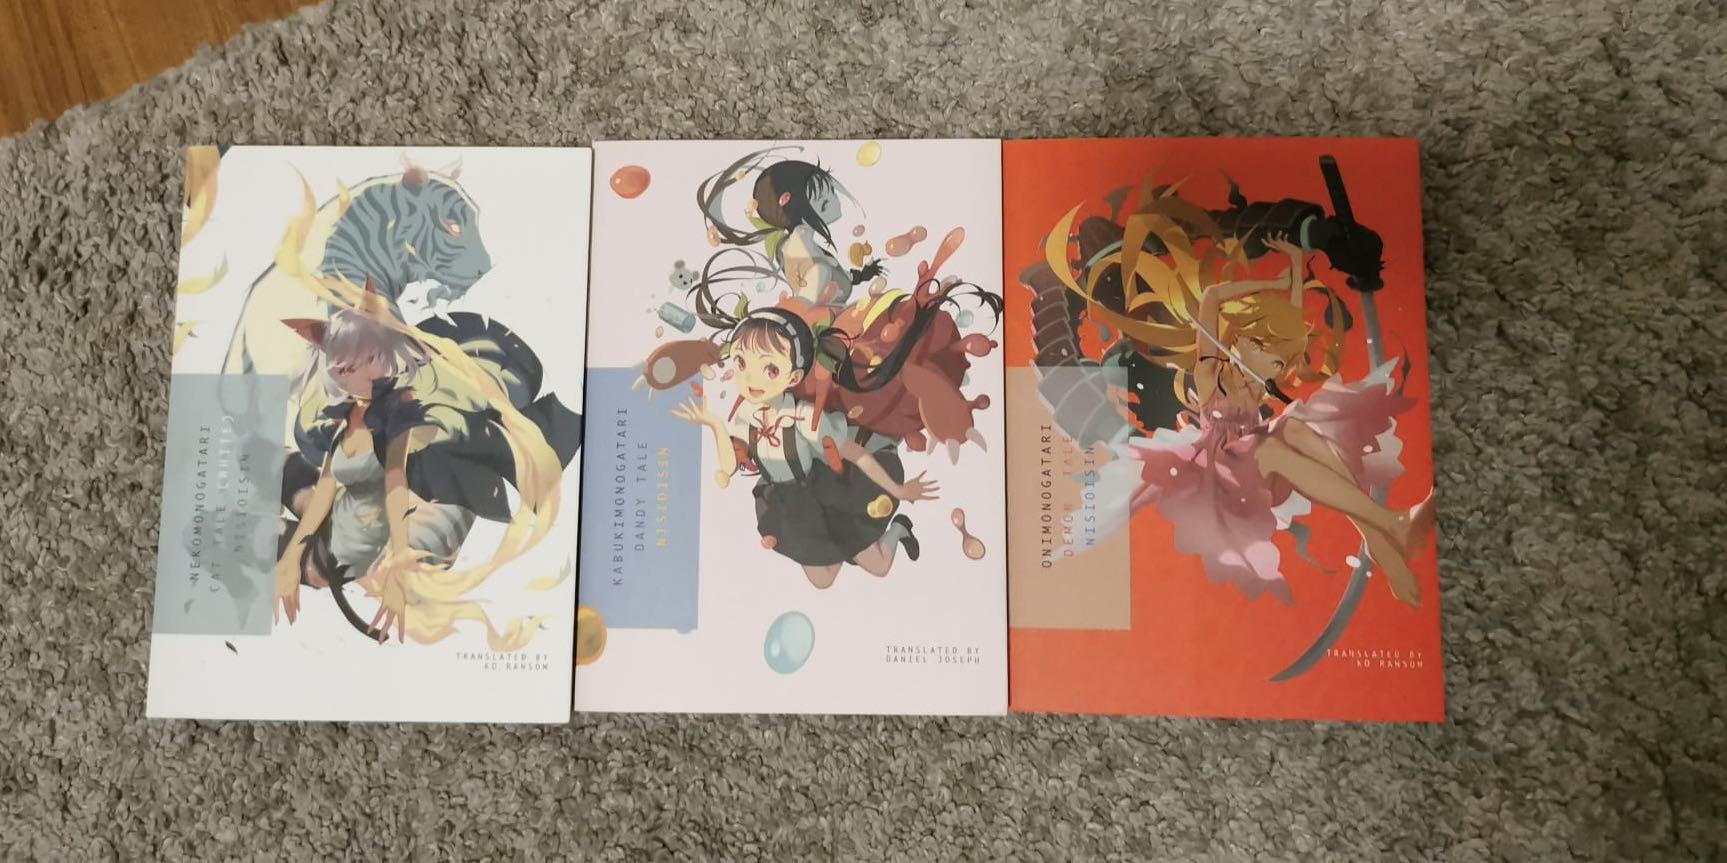 JAPAN NISIO ISIN novel: Monogatari Series 